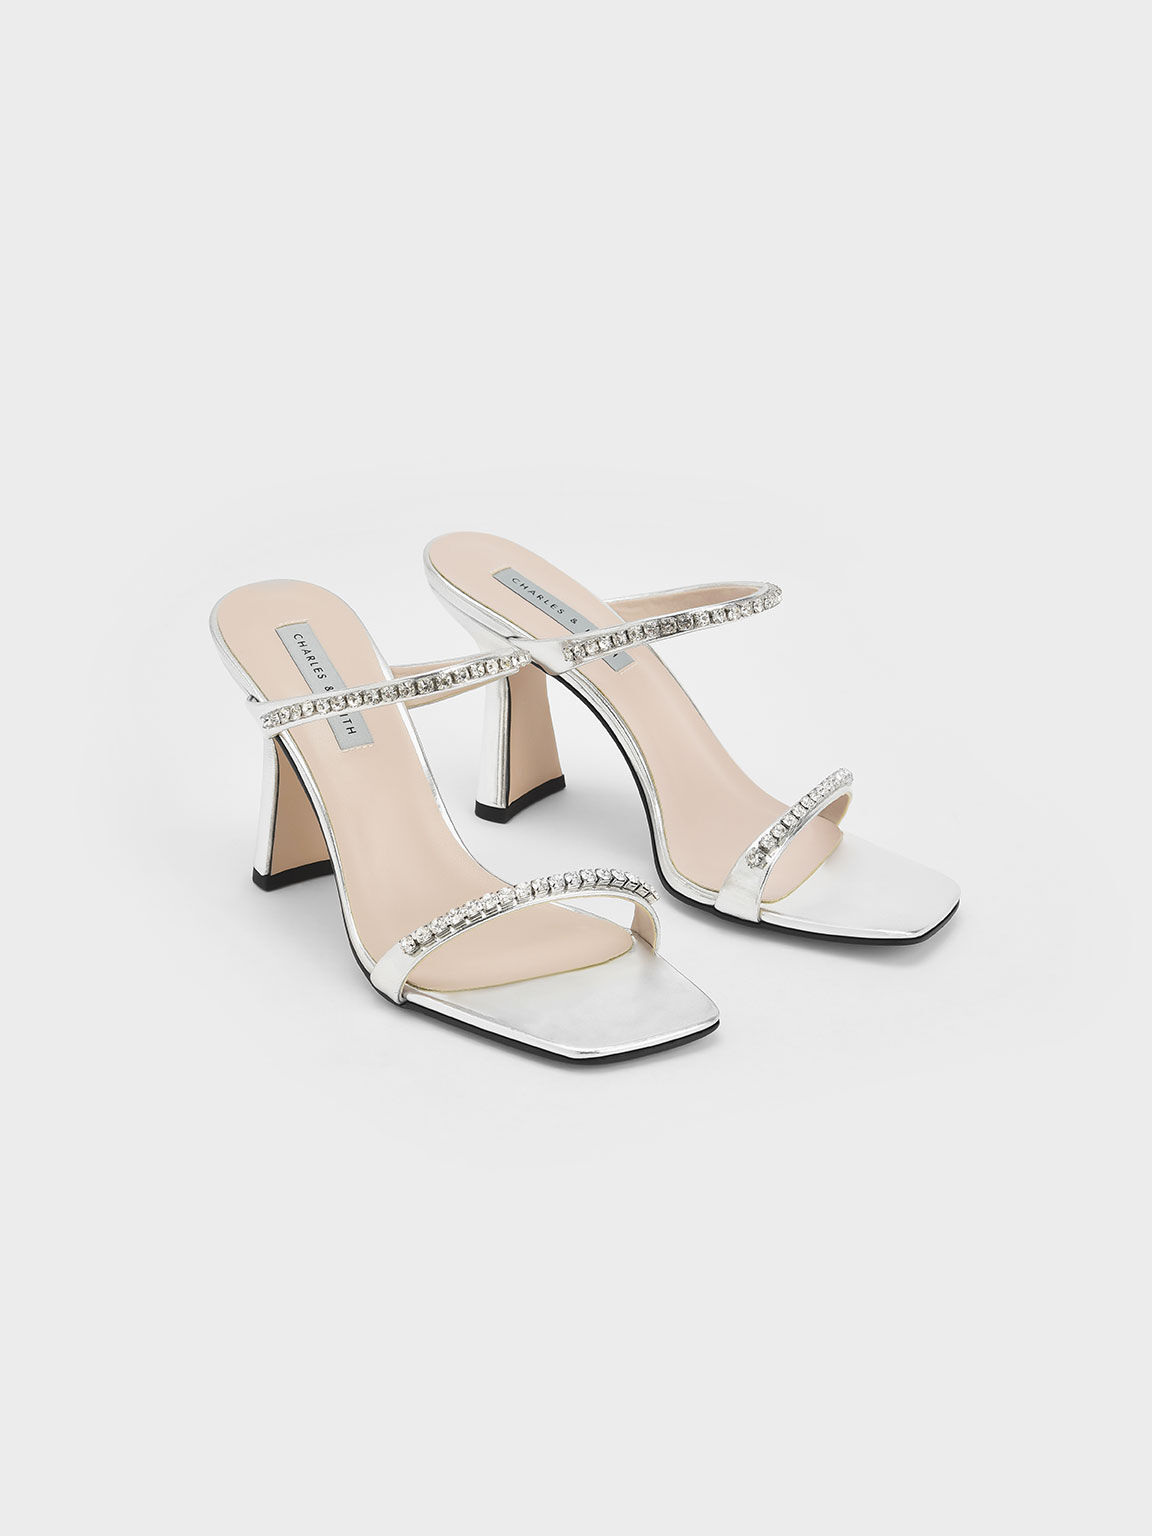 Metallic Gem-Encrusted Heeled Sandals, Silver, hi-res